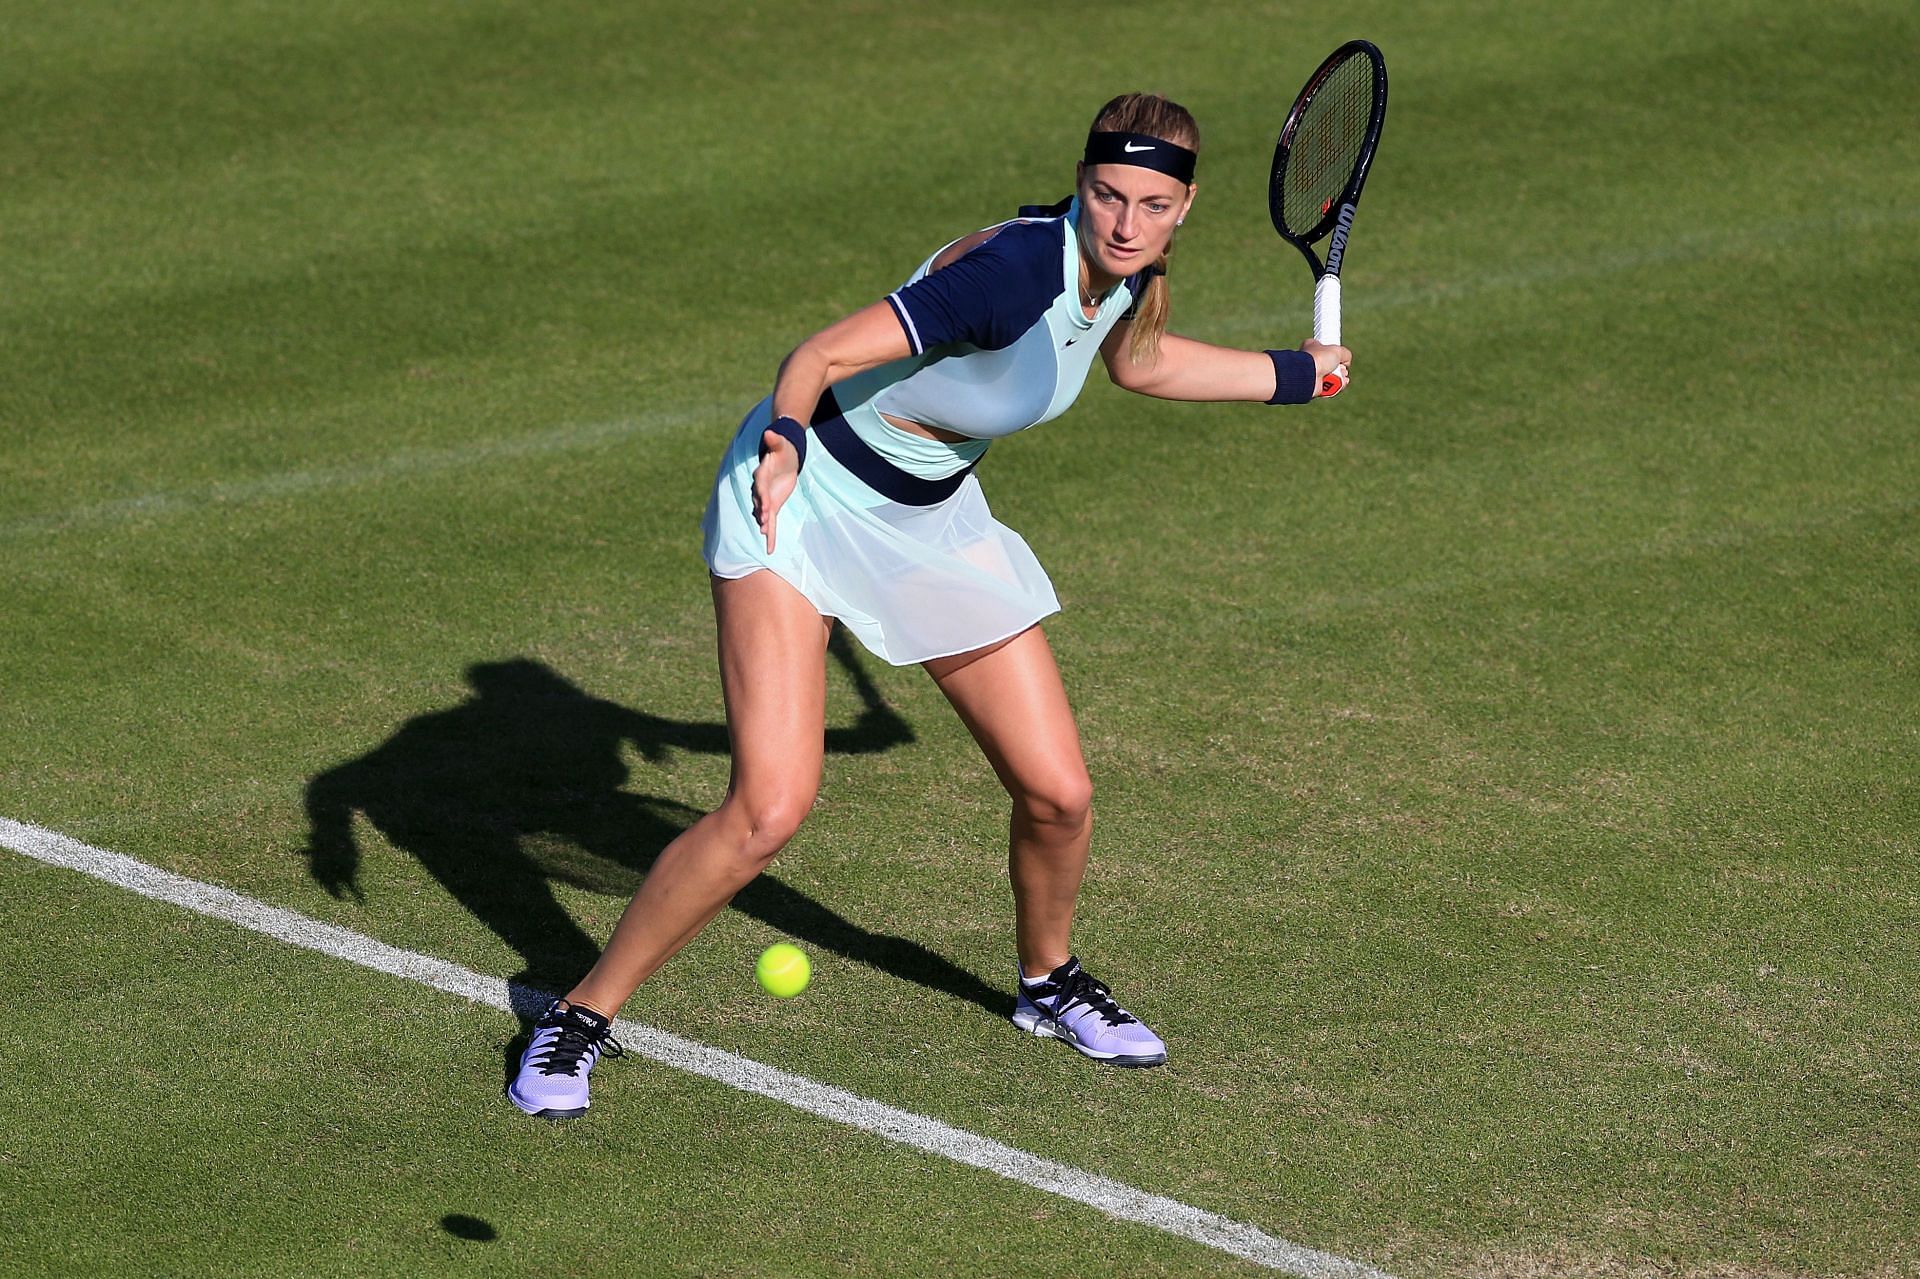 Petra Kvtiova will look to rediscover form ahead of Wimbledon